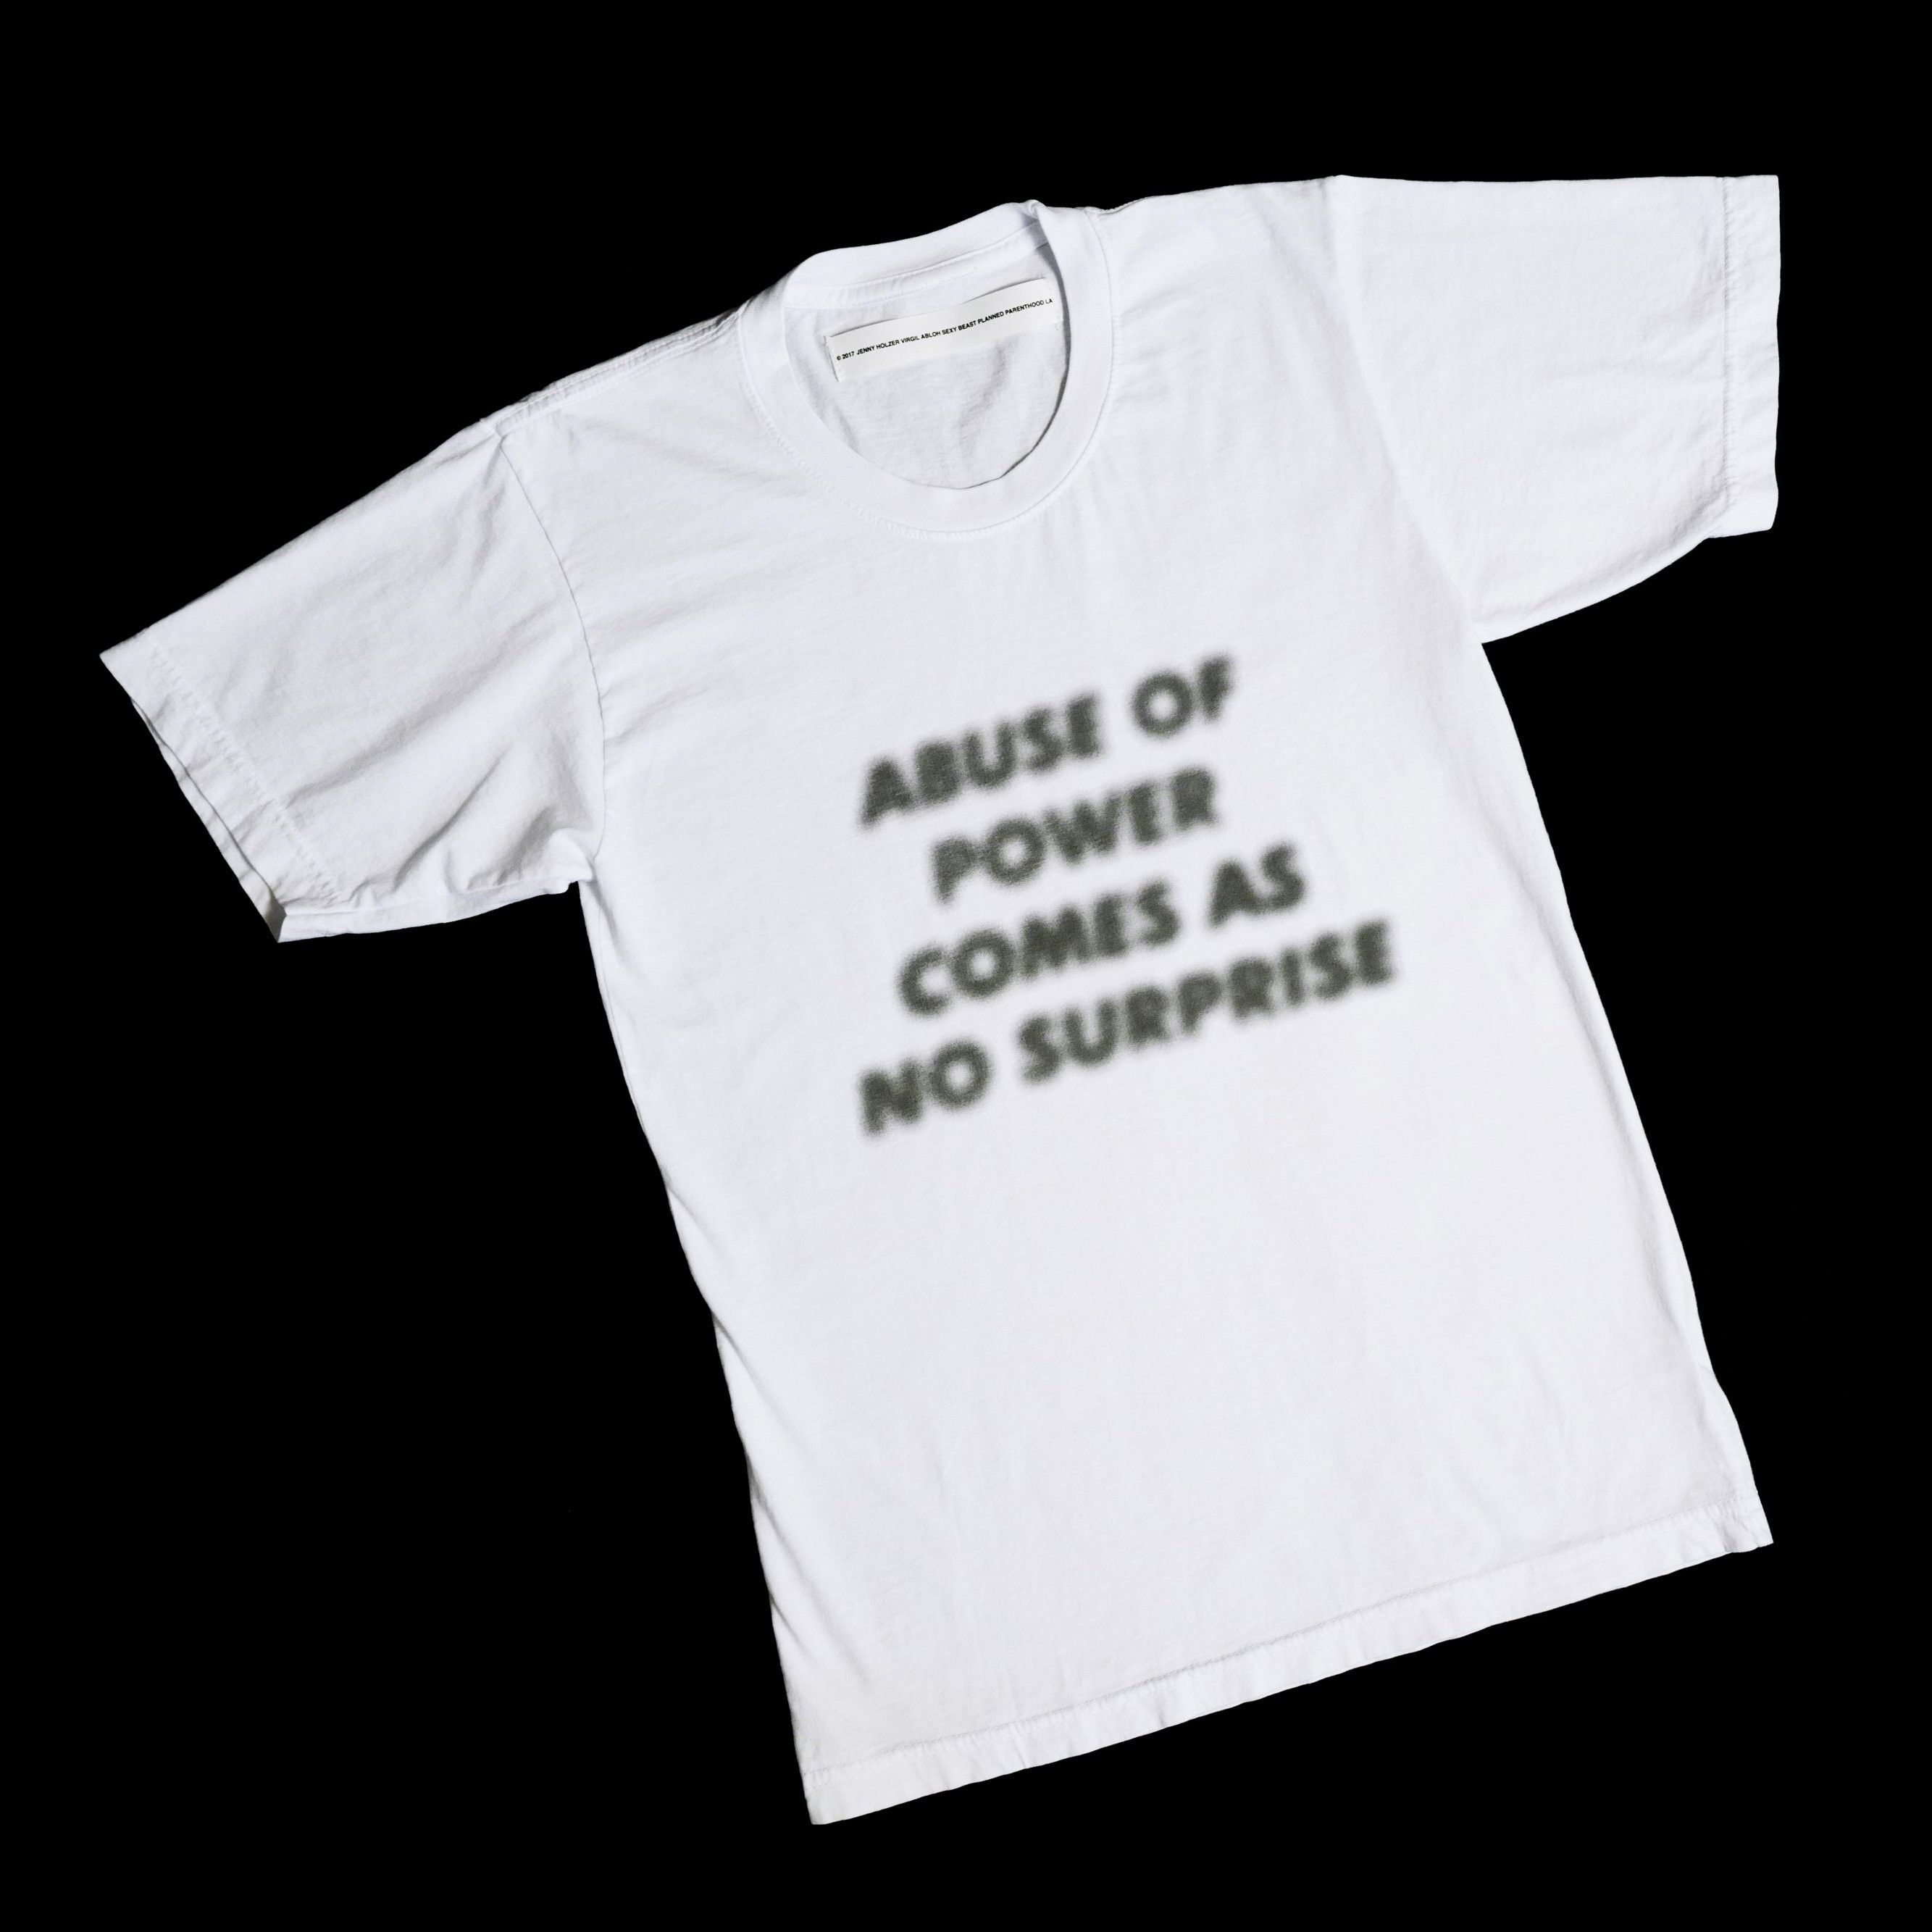 Virgil Abloh VIRGIL ABLOH x JENNY HOLZER Limited Edition T-Shirt New |  Grailed